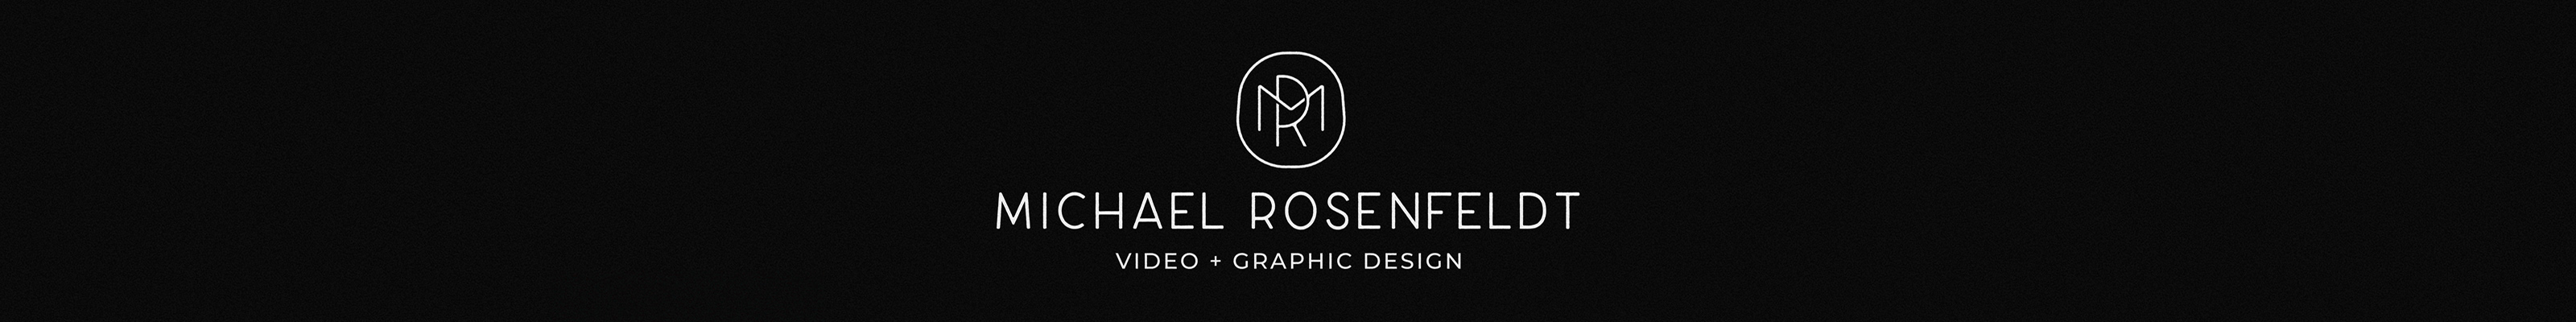 Profielbanner van Michael Rosenfeldt